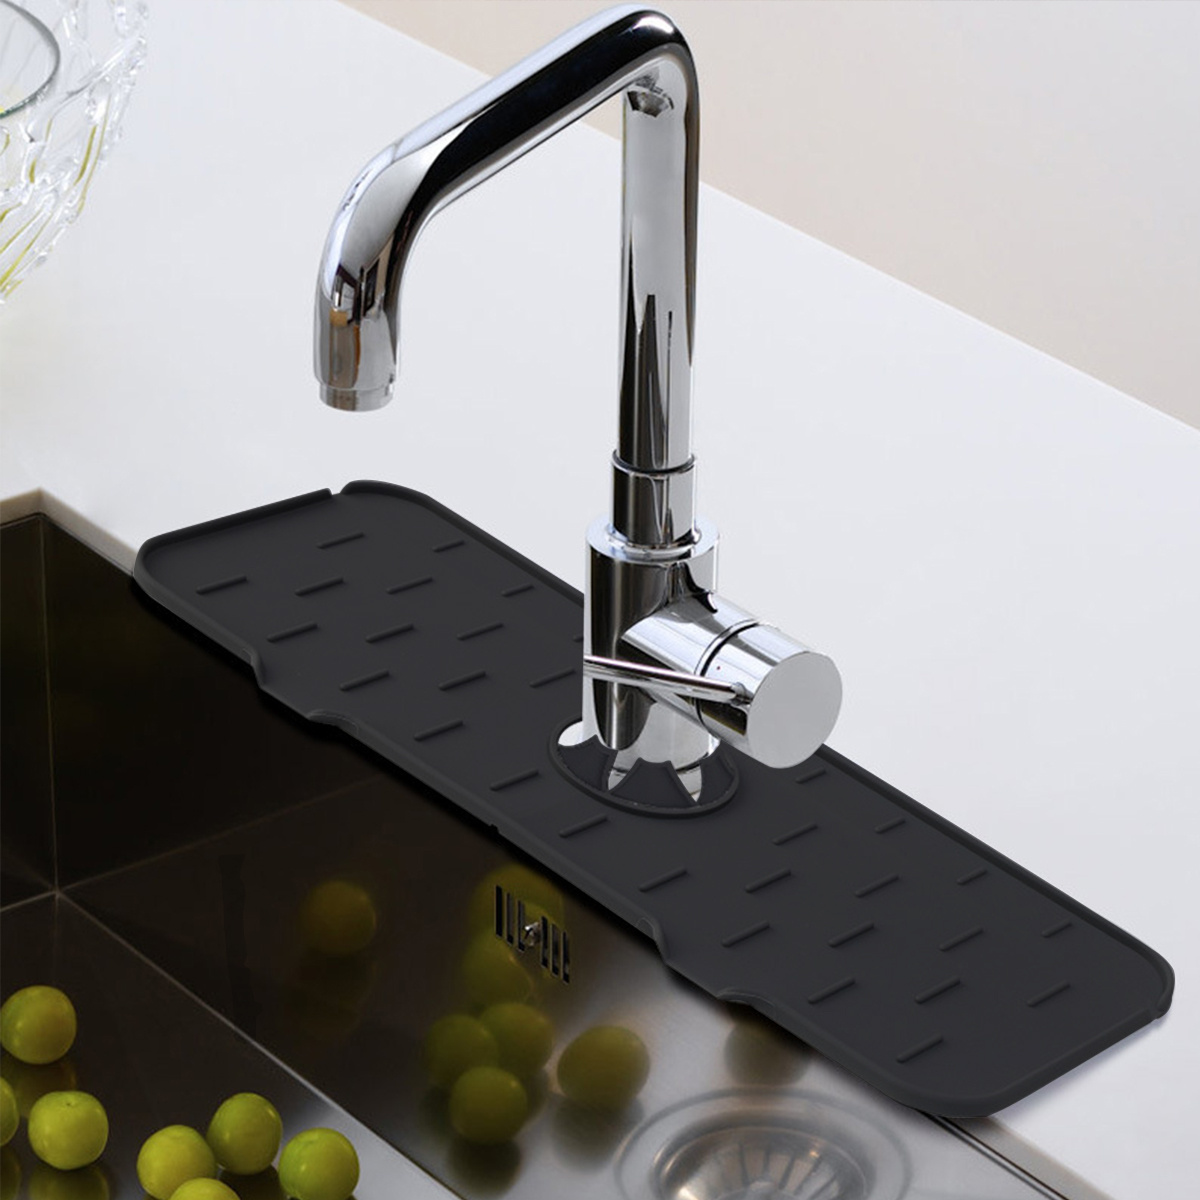  Professional Sink Faucet Mat, Water Splash Guard for